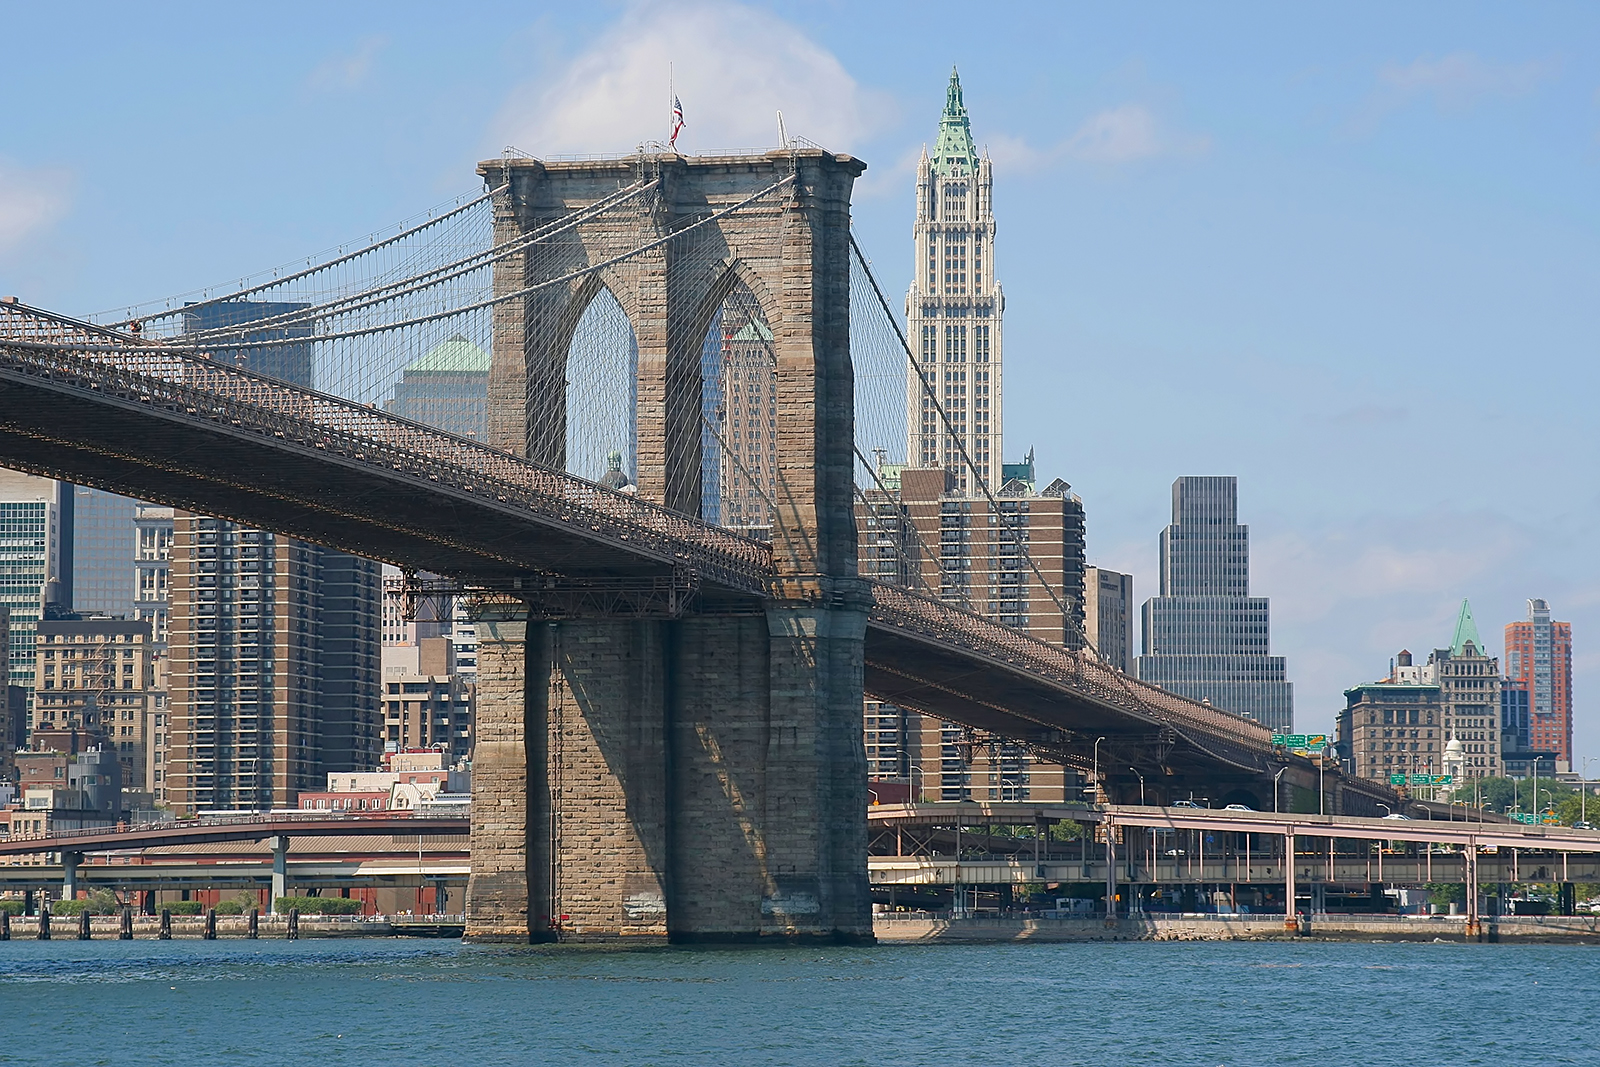 Best Photo Ops USA - Visit The Brooklyn Bridge